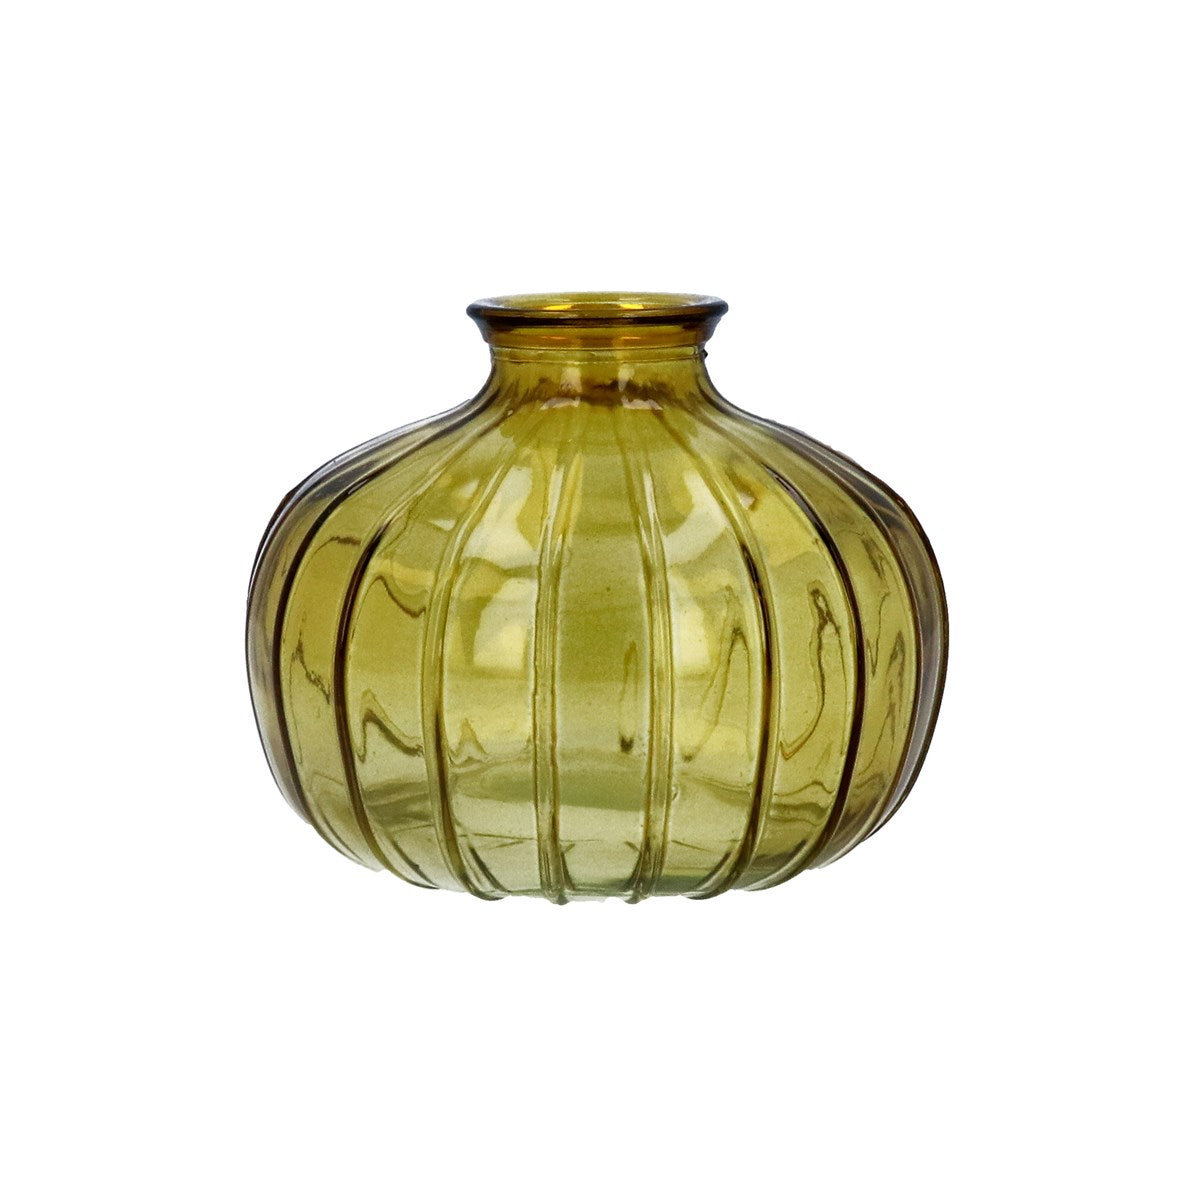 Straw Yellow Glass Onion Bud Vase